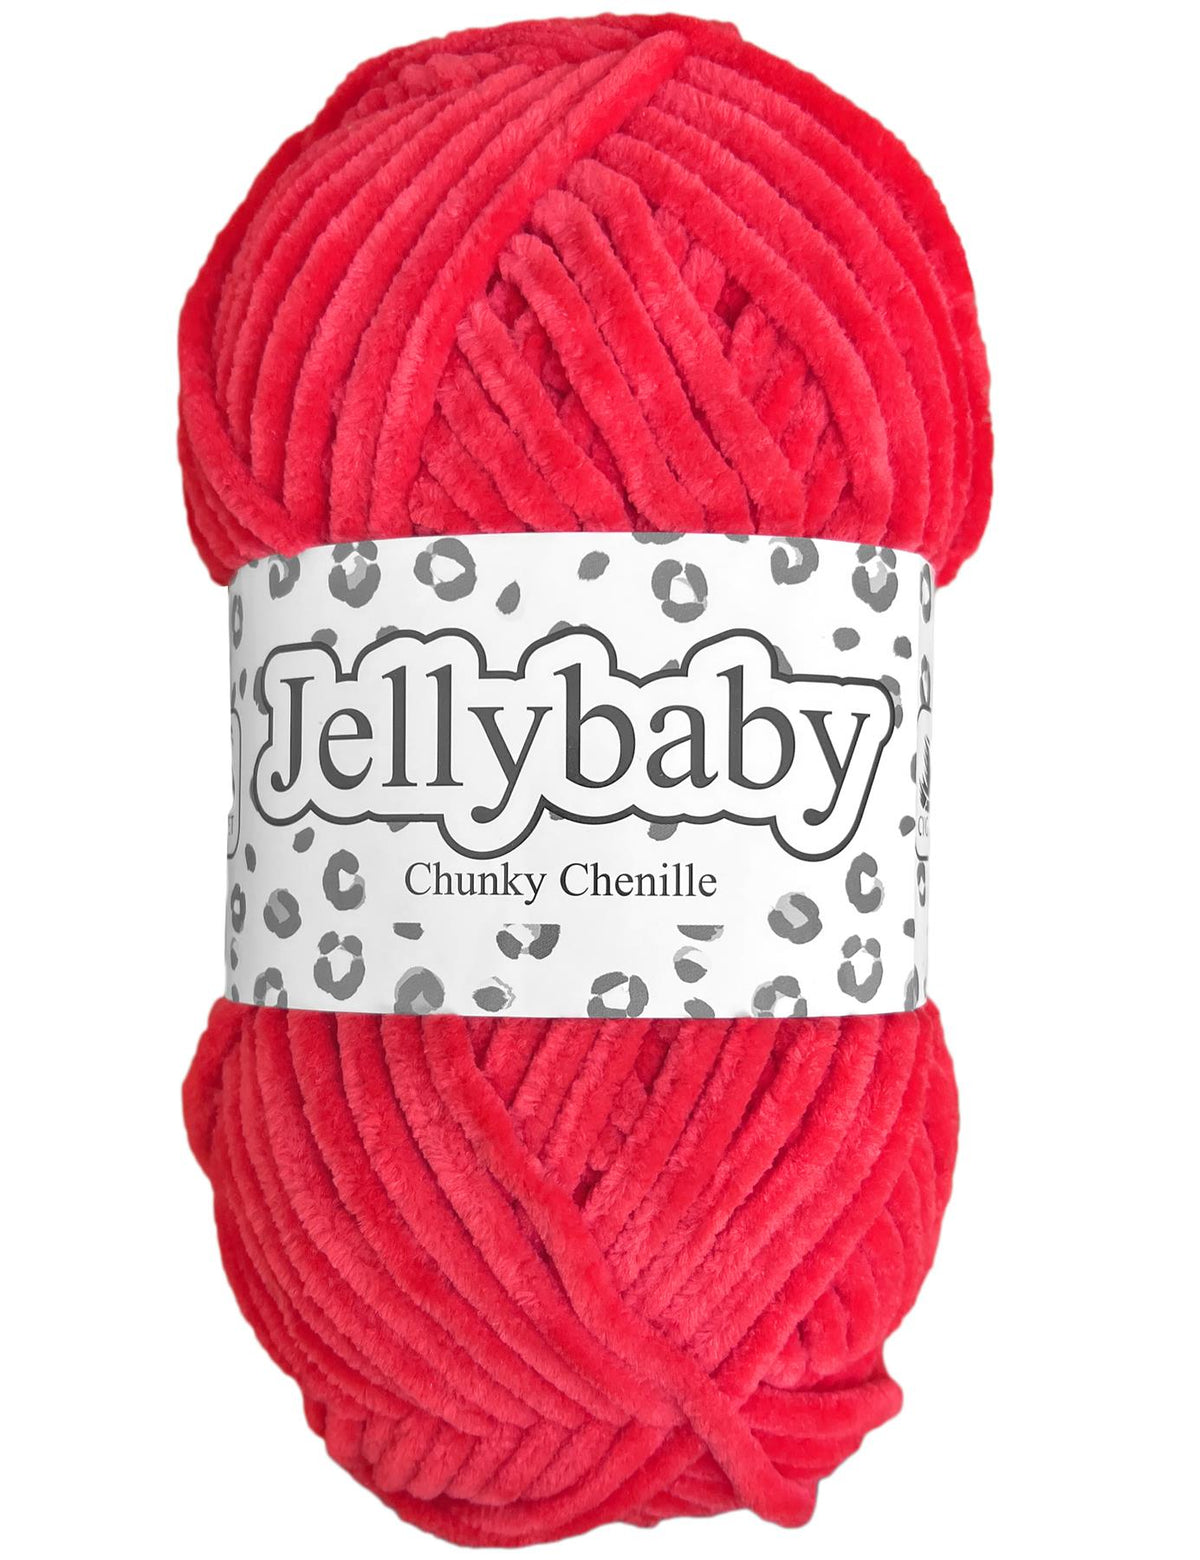 Cygnet Jellybaby Chenille Chunky Cherry Red (003) -100g